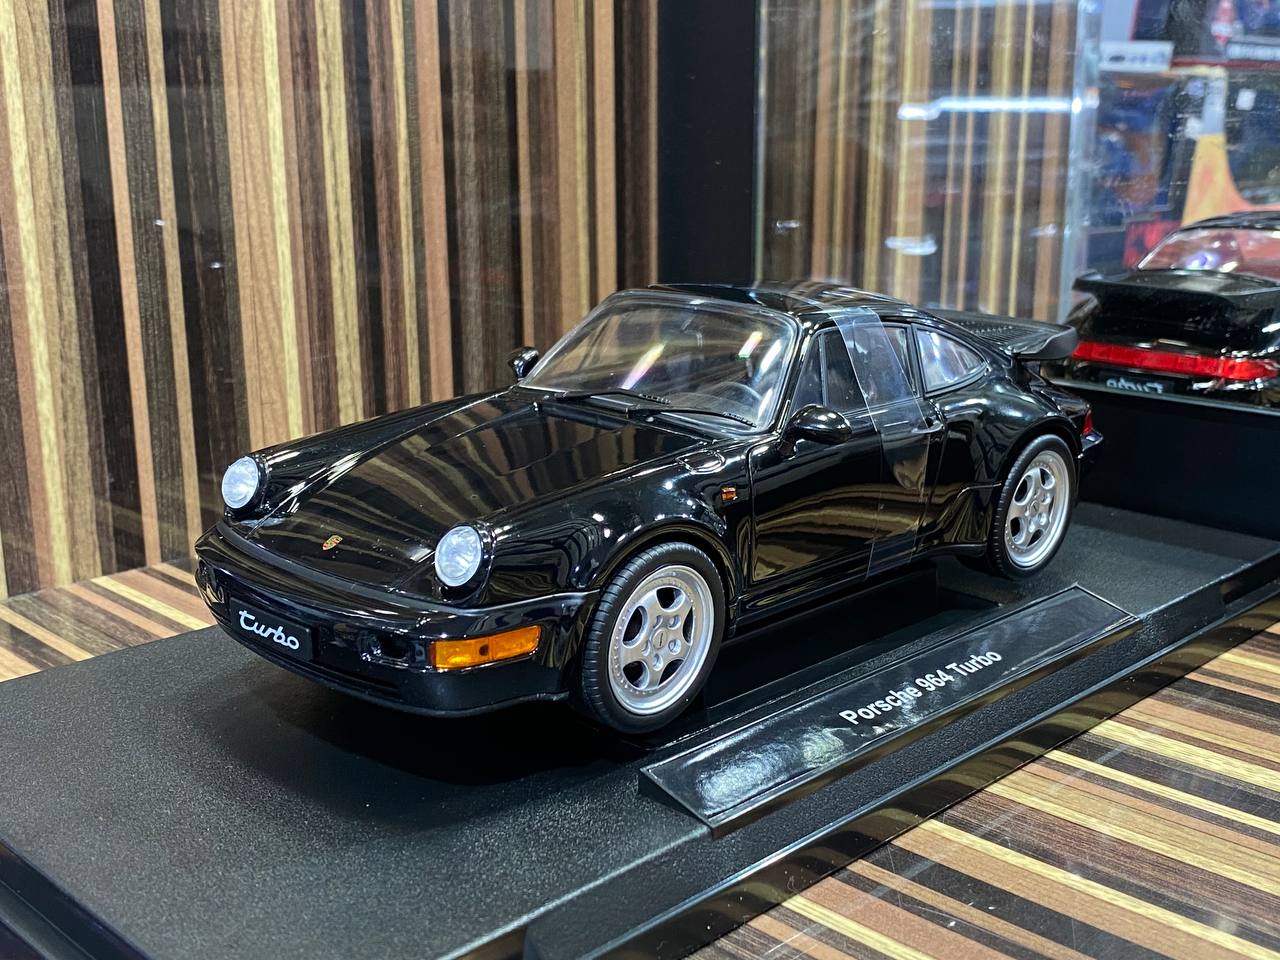 1/18 Welly Metal Diecast - Porsche 964 Turbo in Sleek Black|Sold in Dturman.com Dubai UAE.